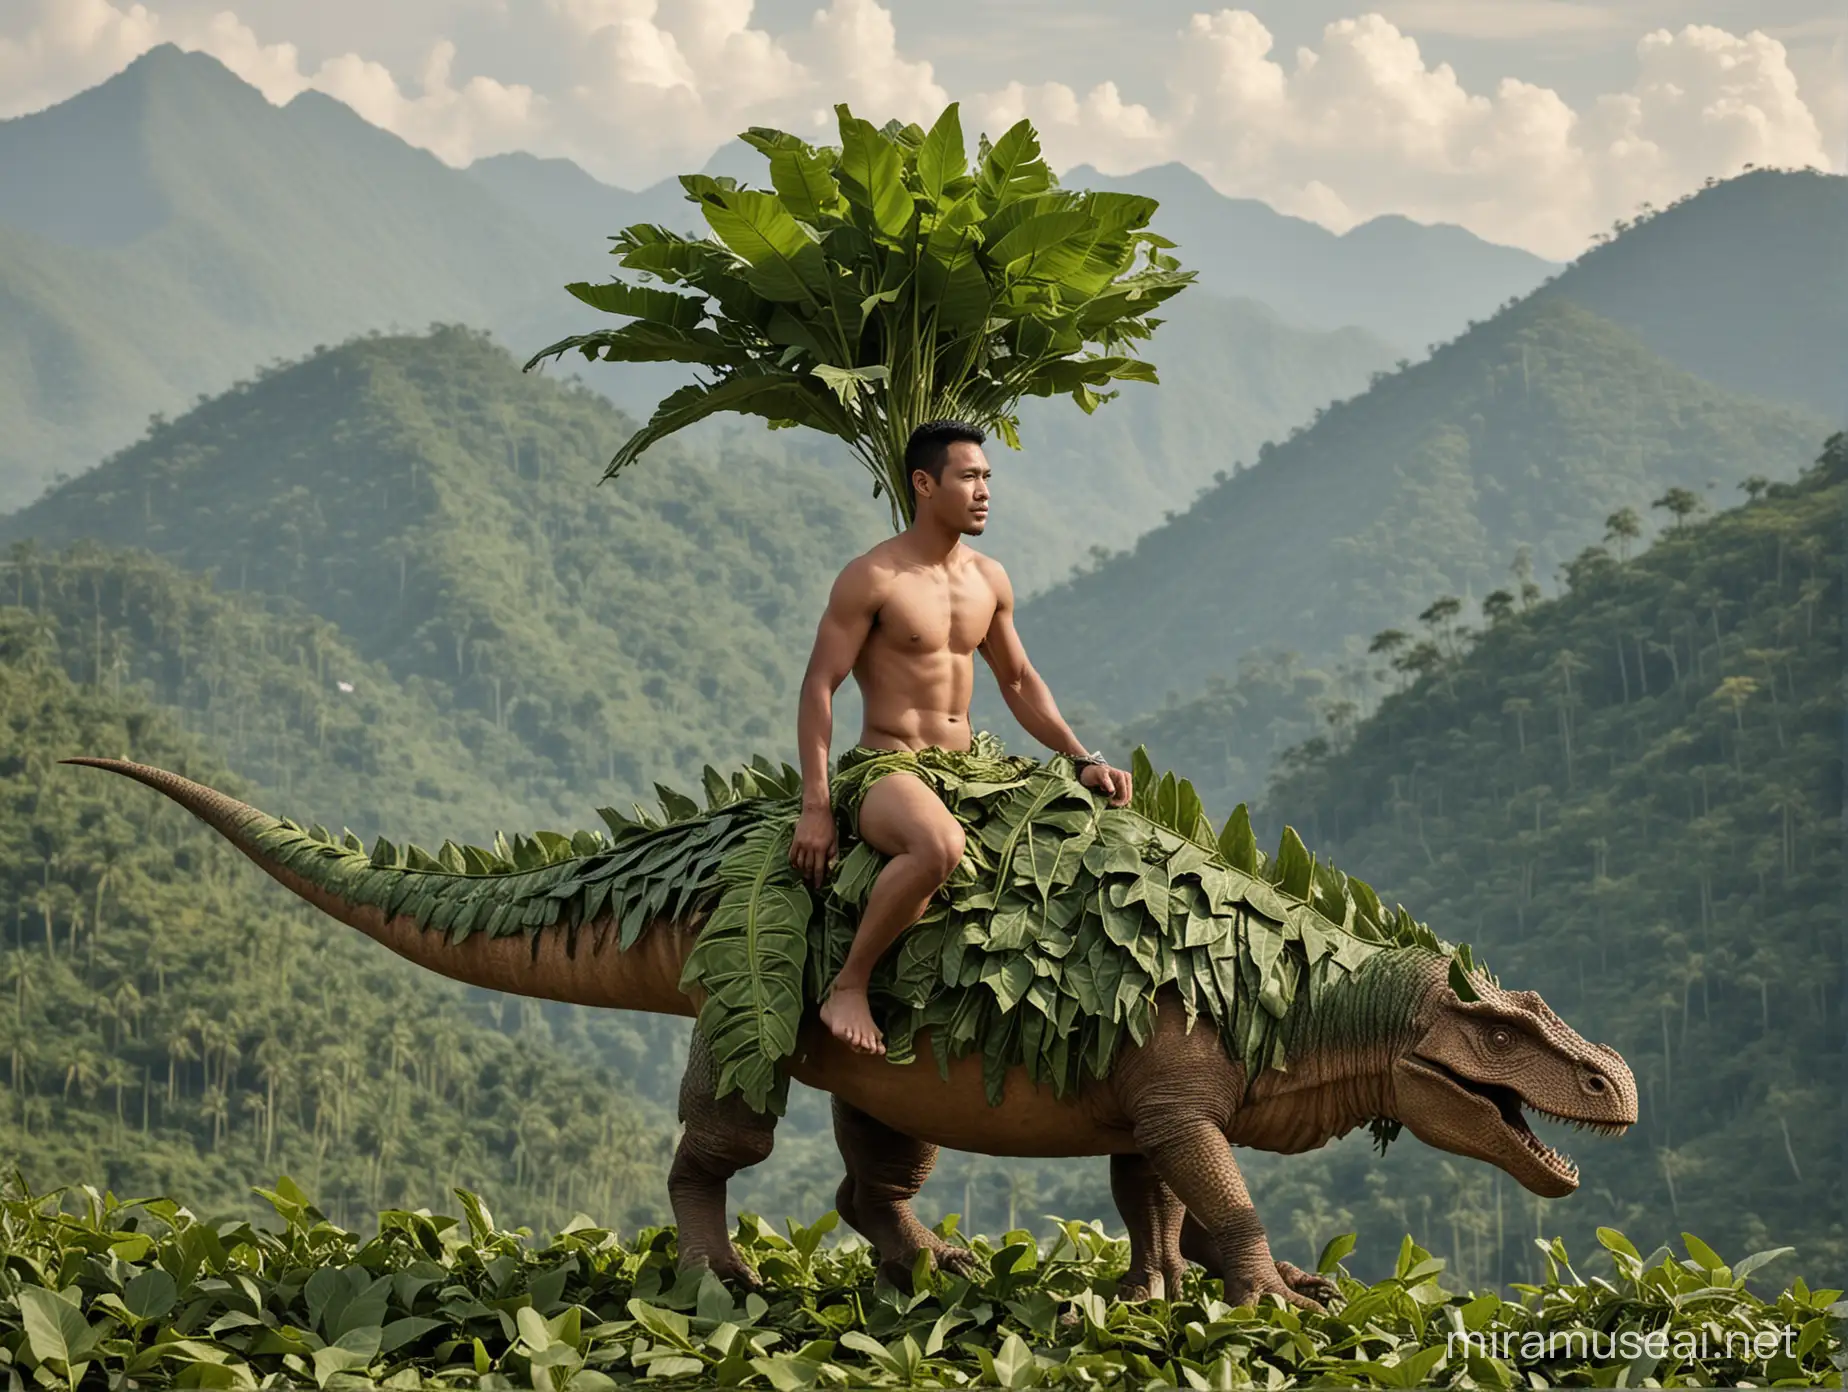 Javanese Man Riding Dinosaur in Leaf Underwear Amidst Majestic Mountains